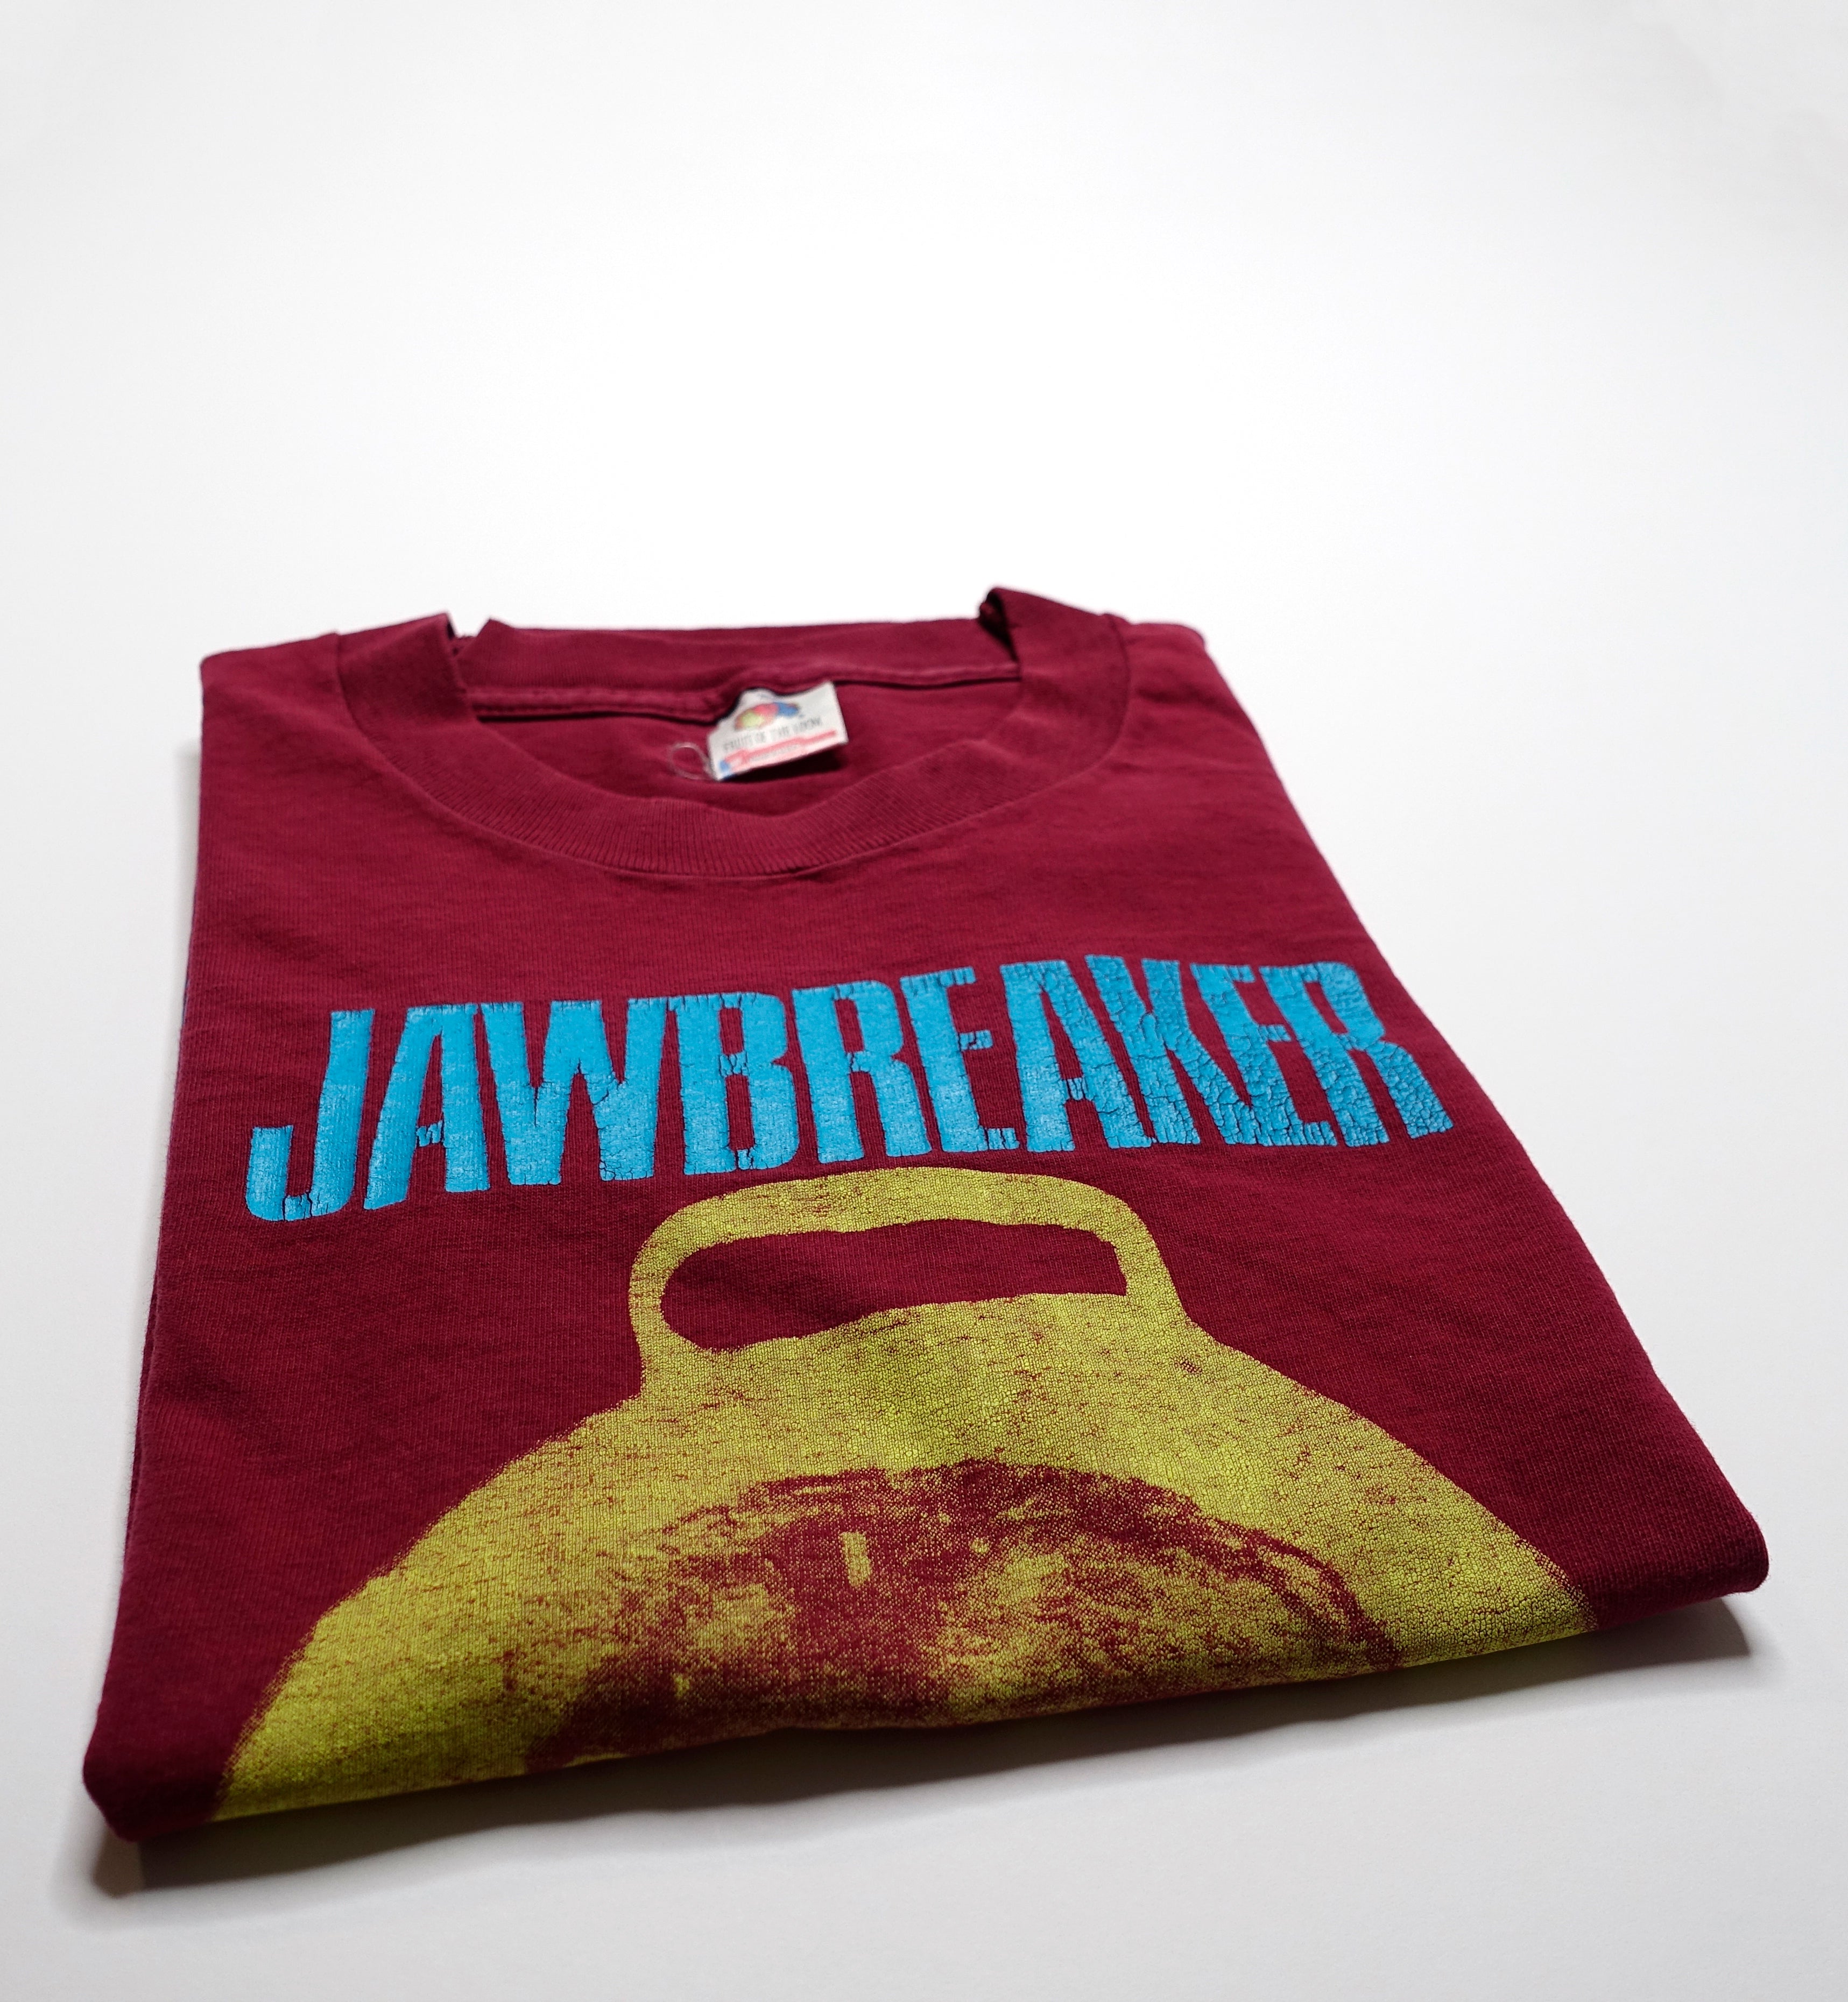 Jawbreaker - 24Hr Revenge Therapy 1994 Tour Shirt Size XL (Maroon)